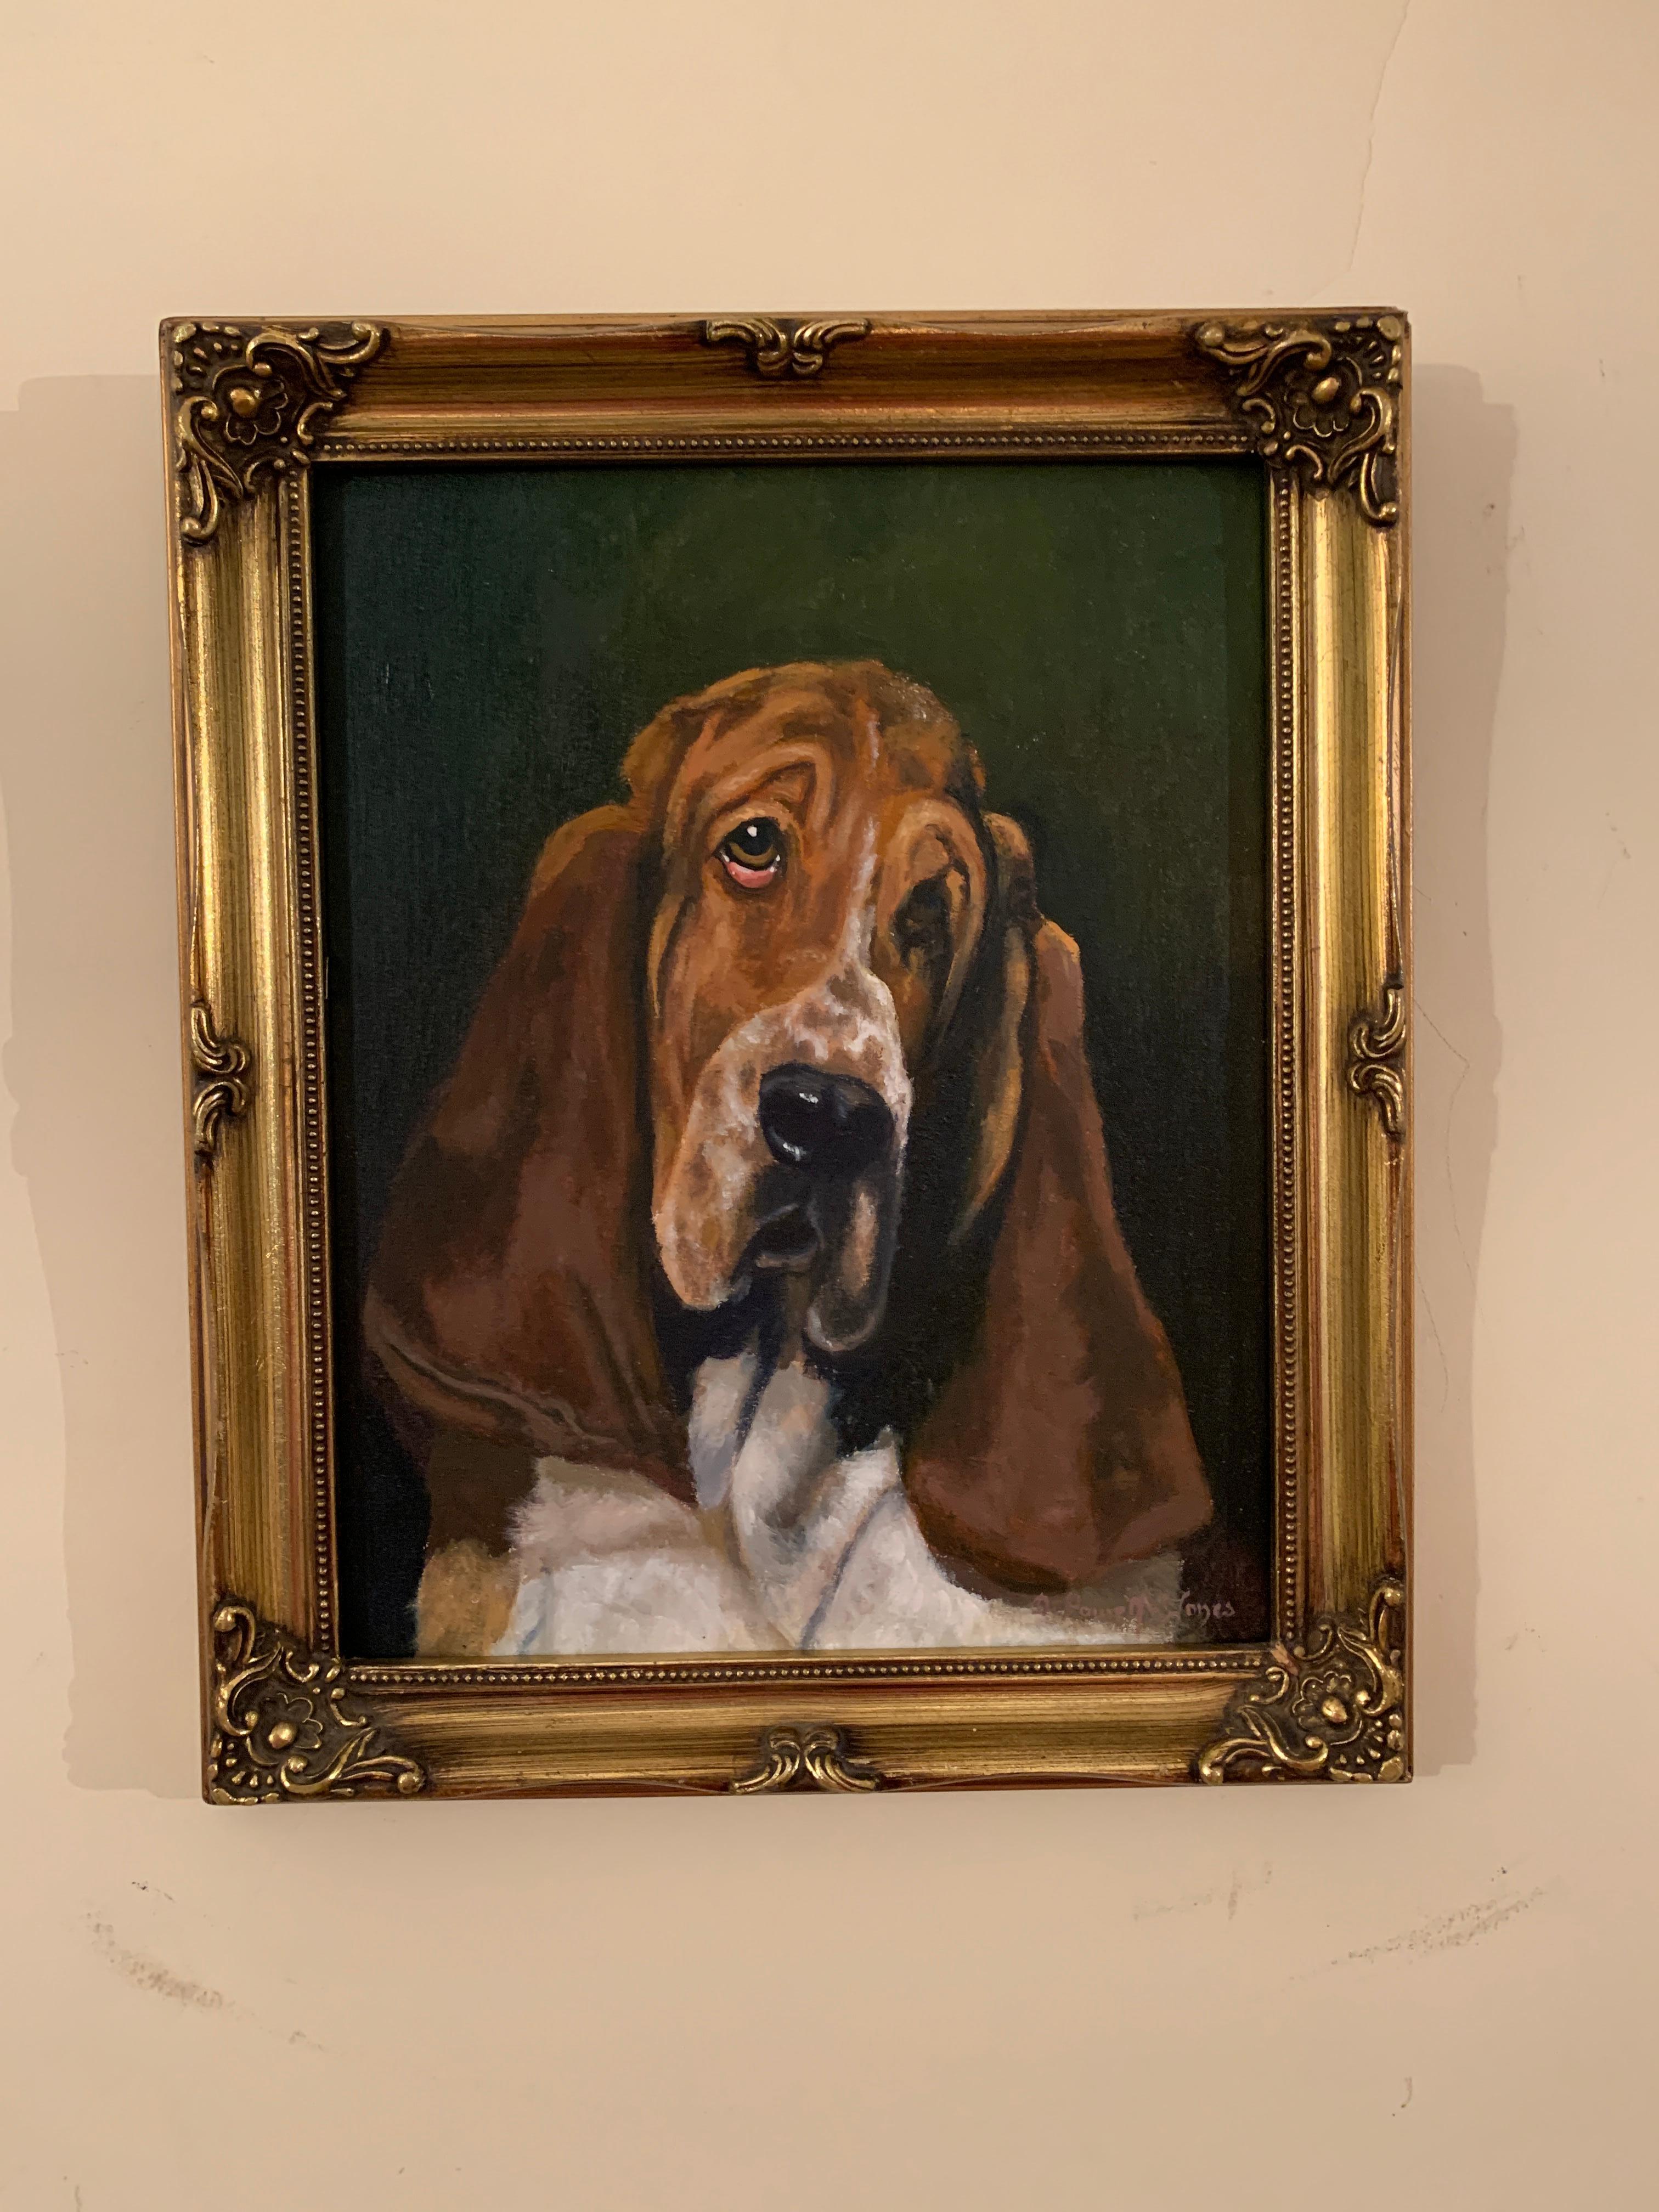 Derek Powell-Jones Animal Painting - Oil painting of an English Bassett Hound dog portrait in an interior